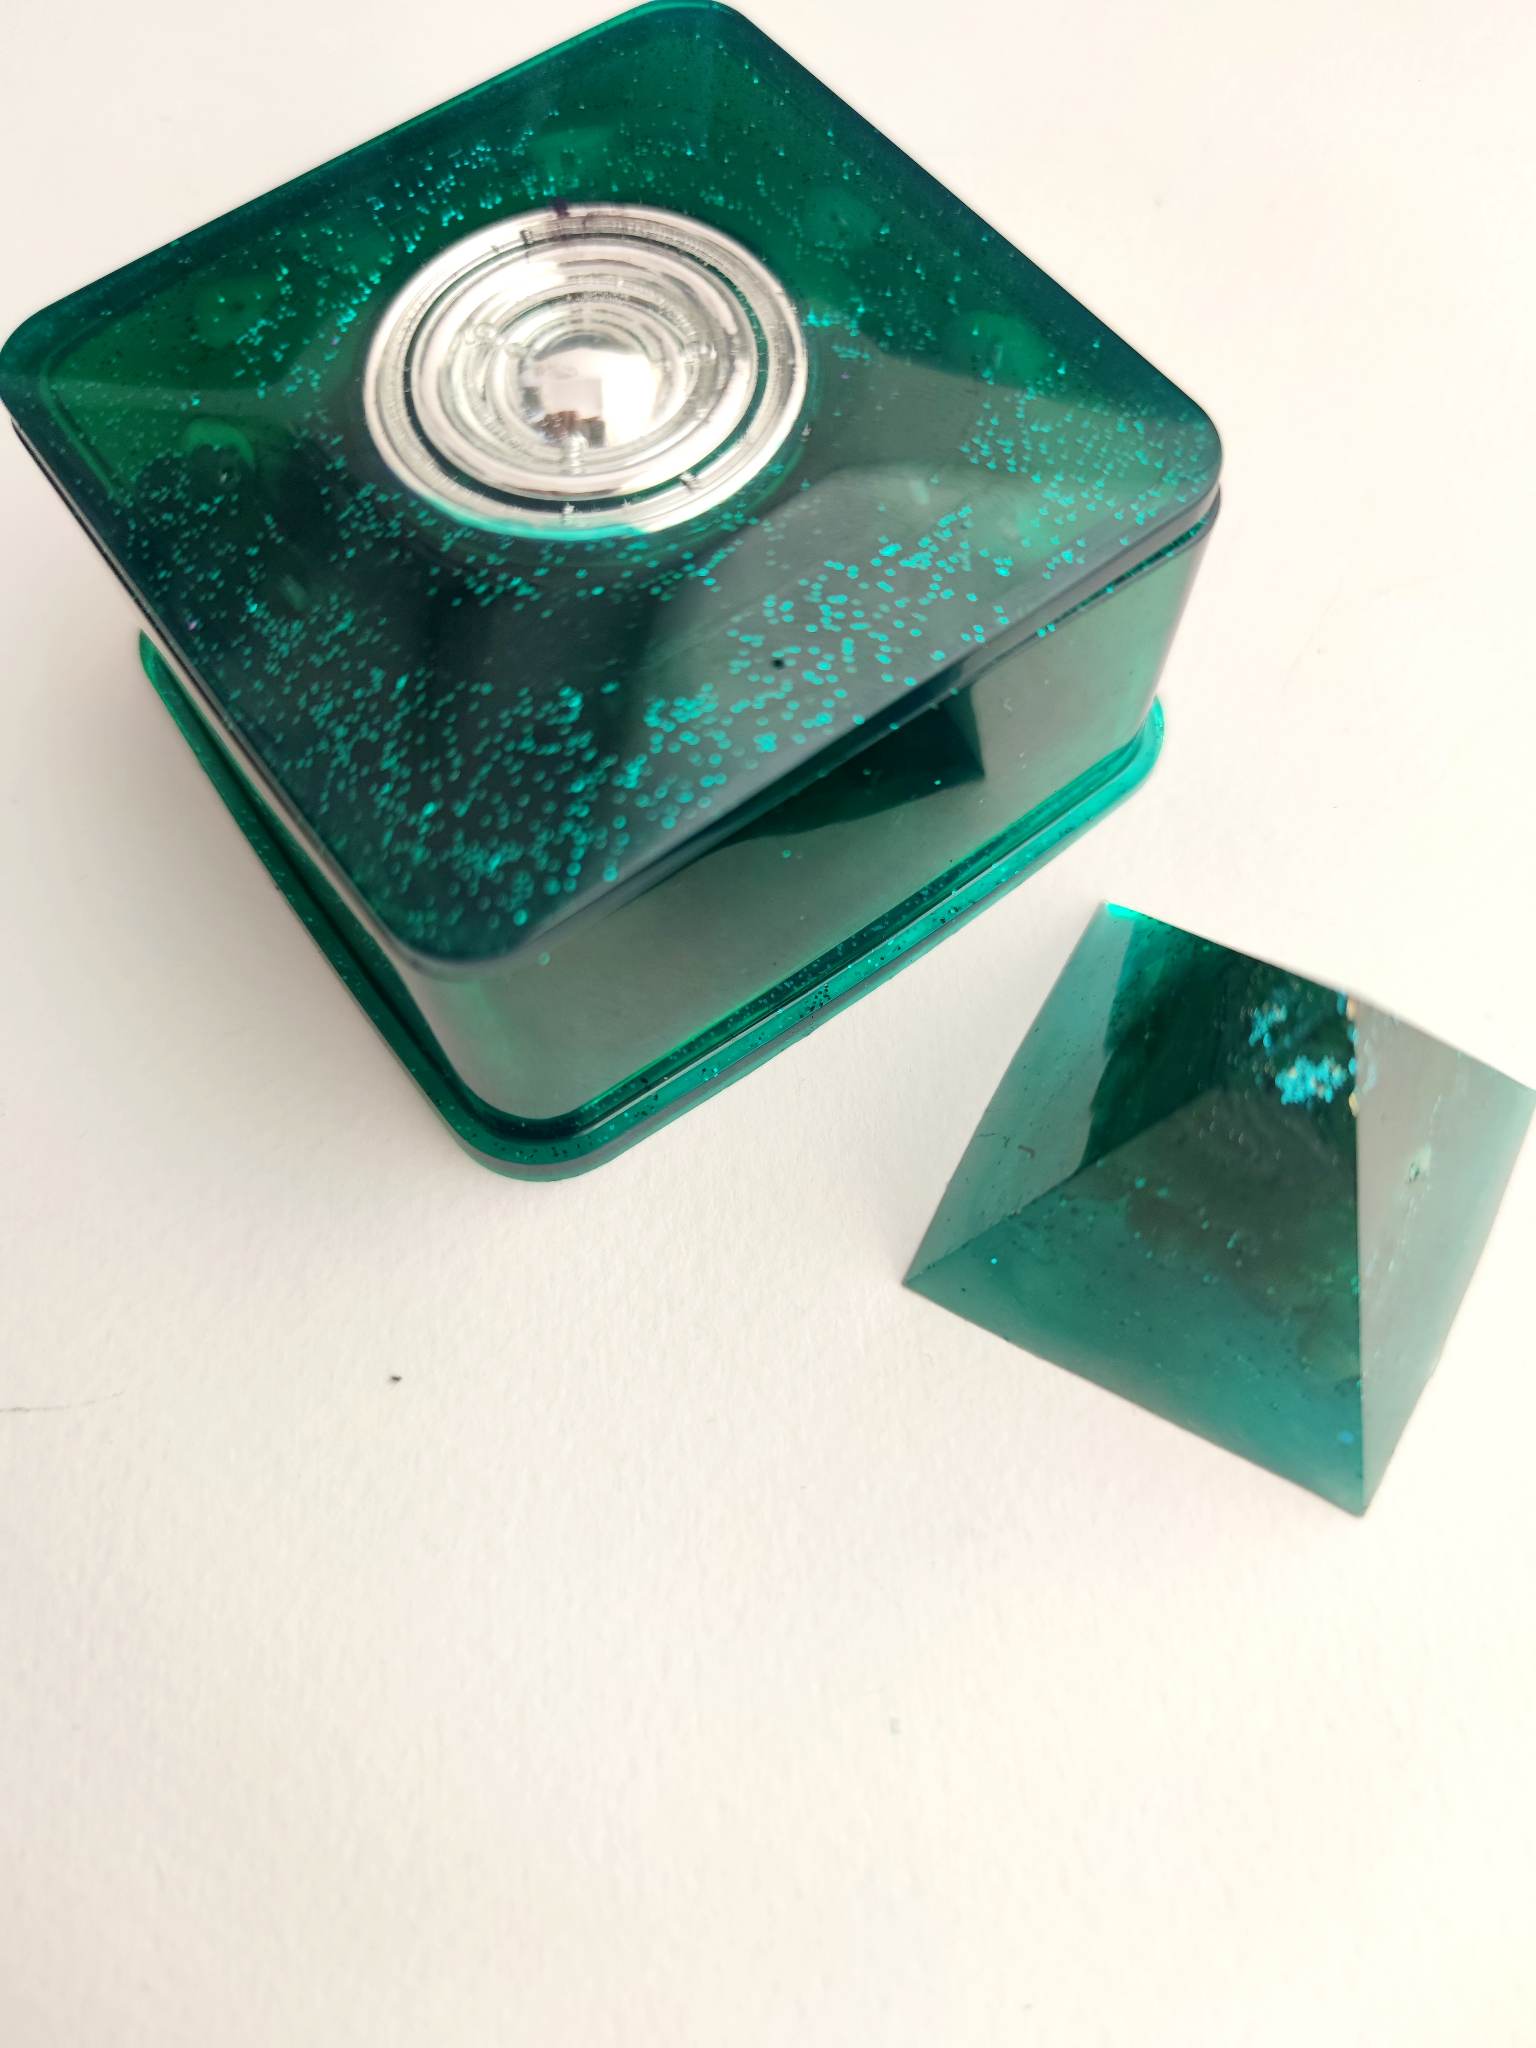 Orgonite box for storing semi-precious stones, runes, and magical jewelry - Green magic